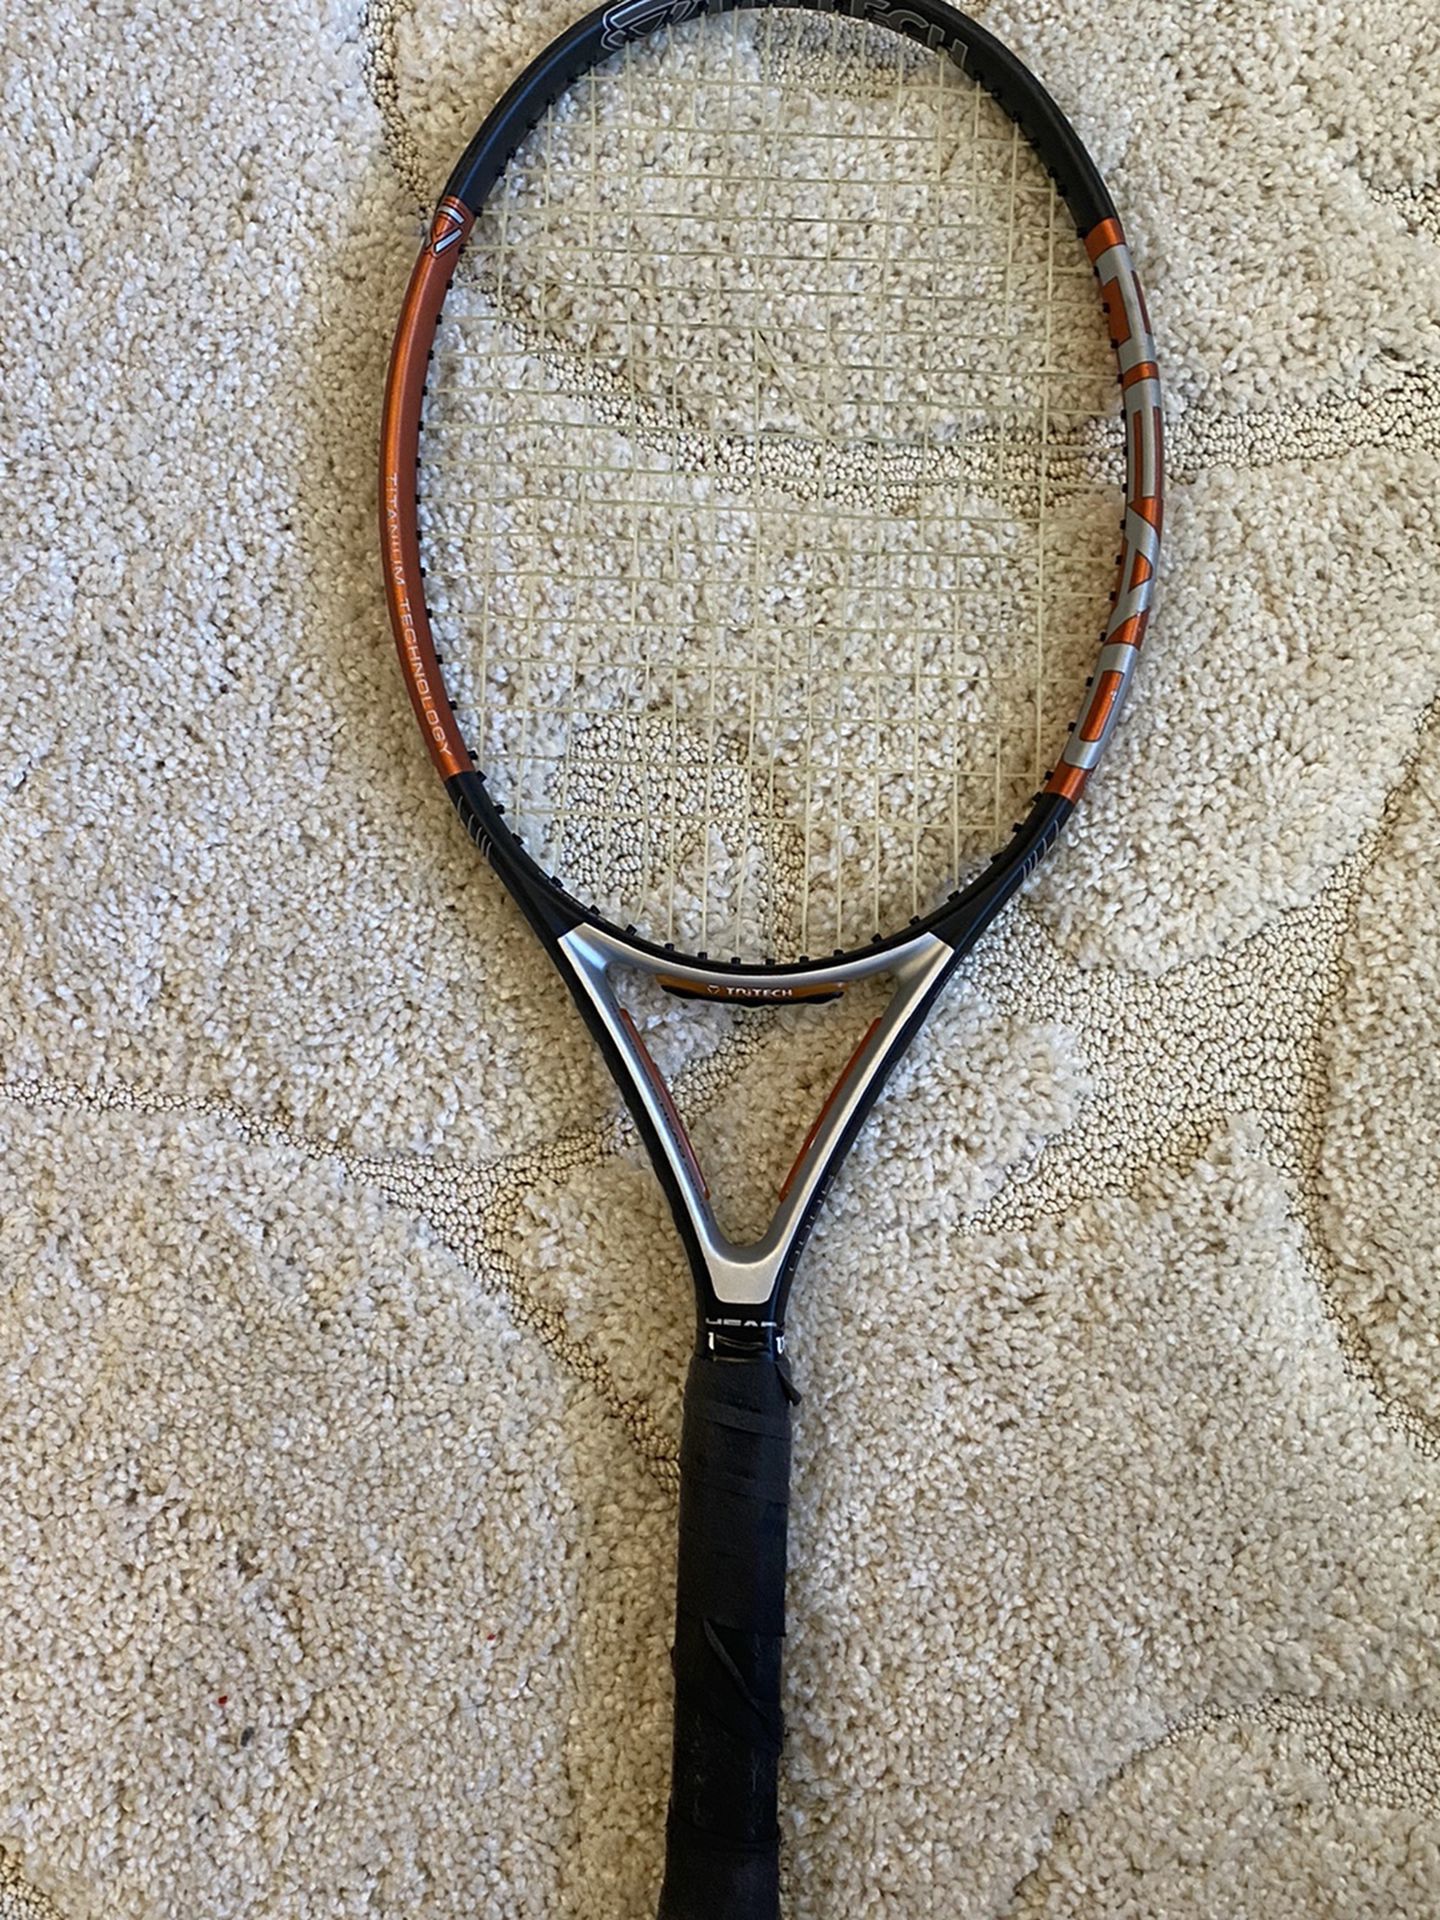 Head Tennis Racket